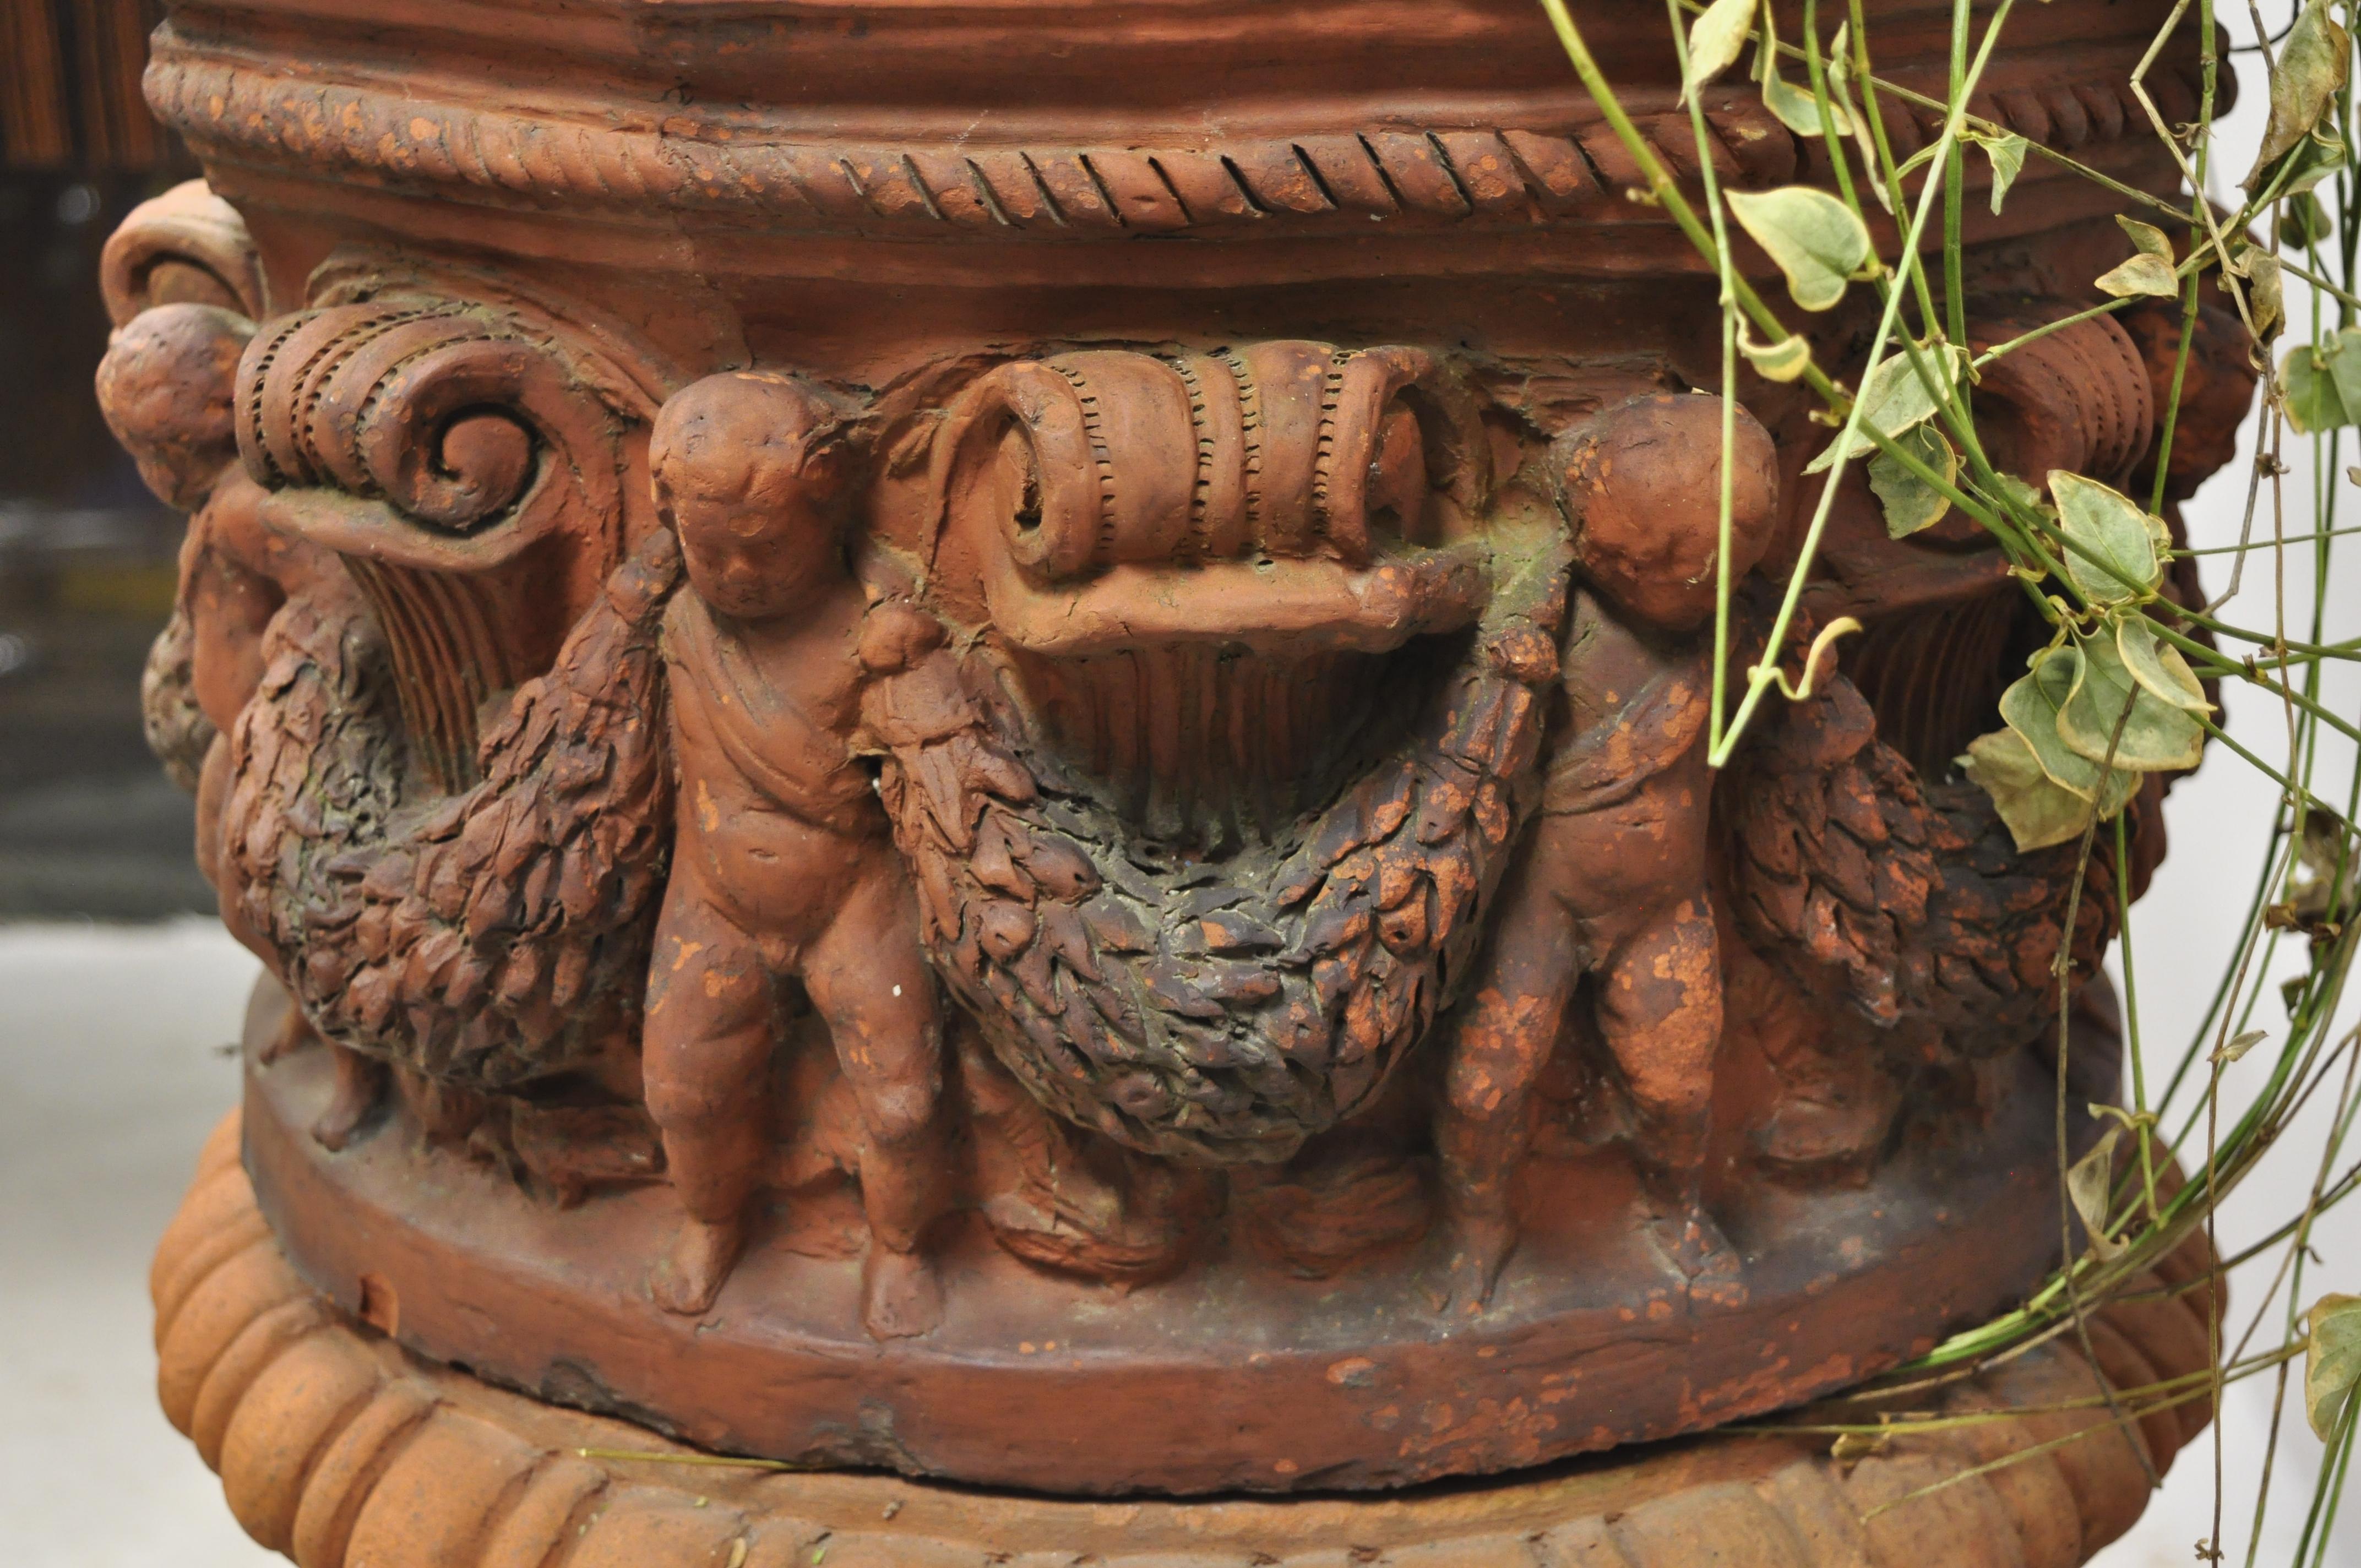 Antique Classical Terracotta Garden Pedestal Planter Pot with Cherub Figures For Sale 1